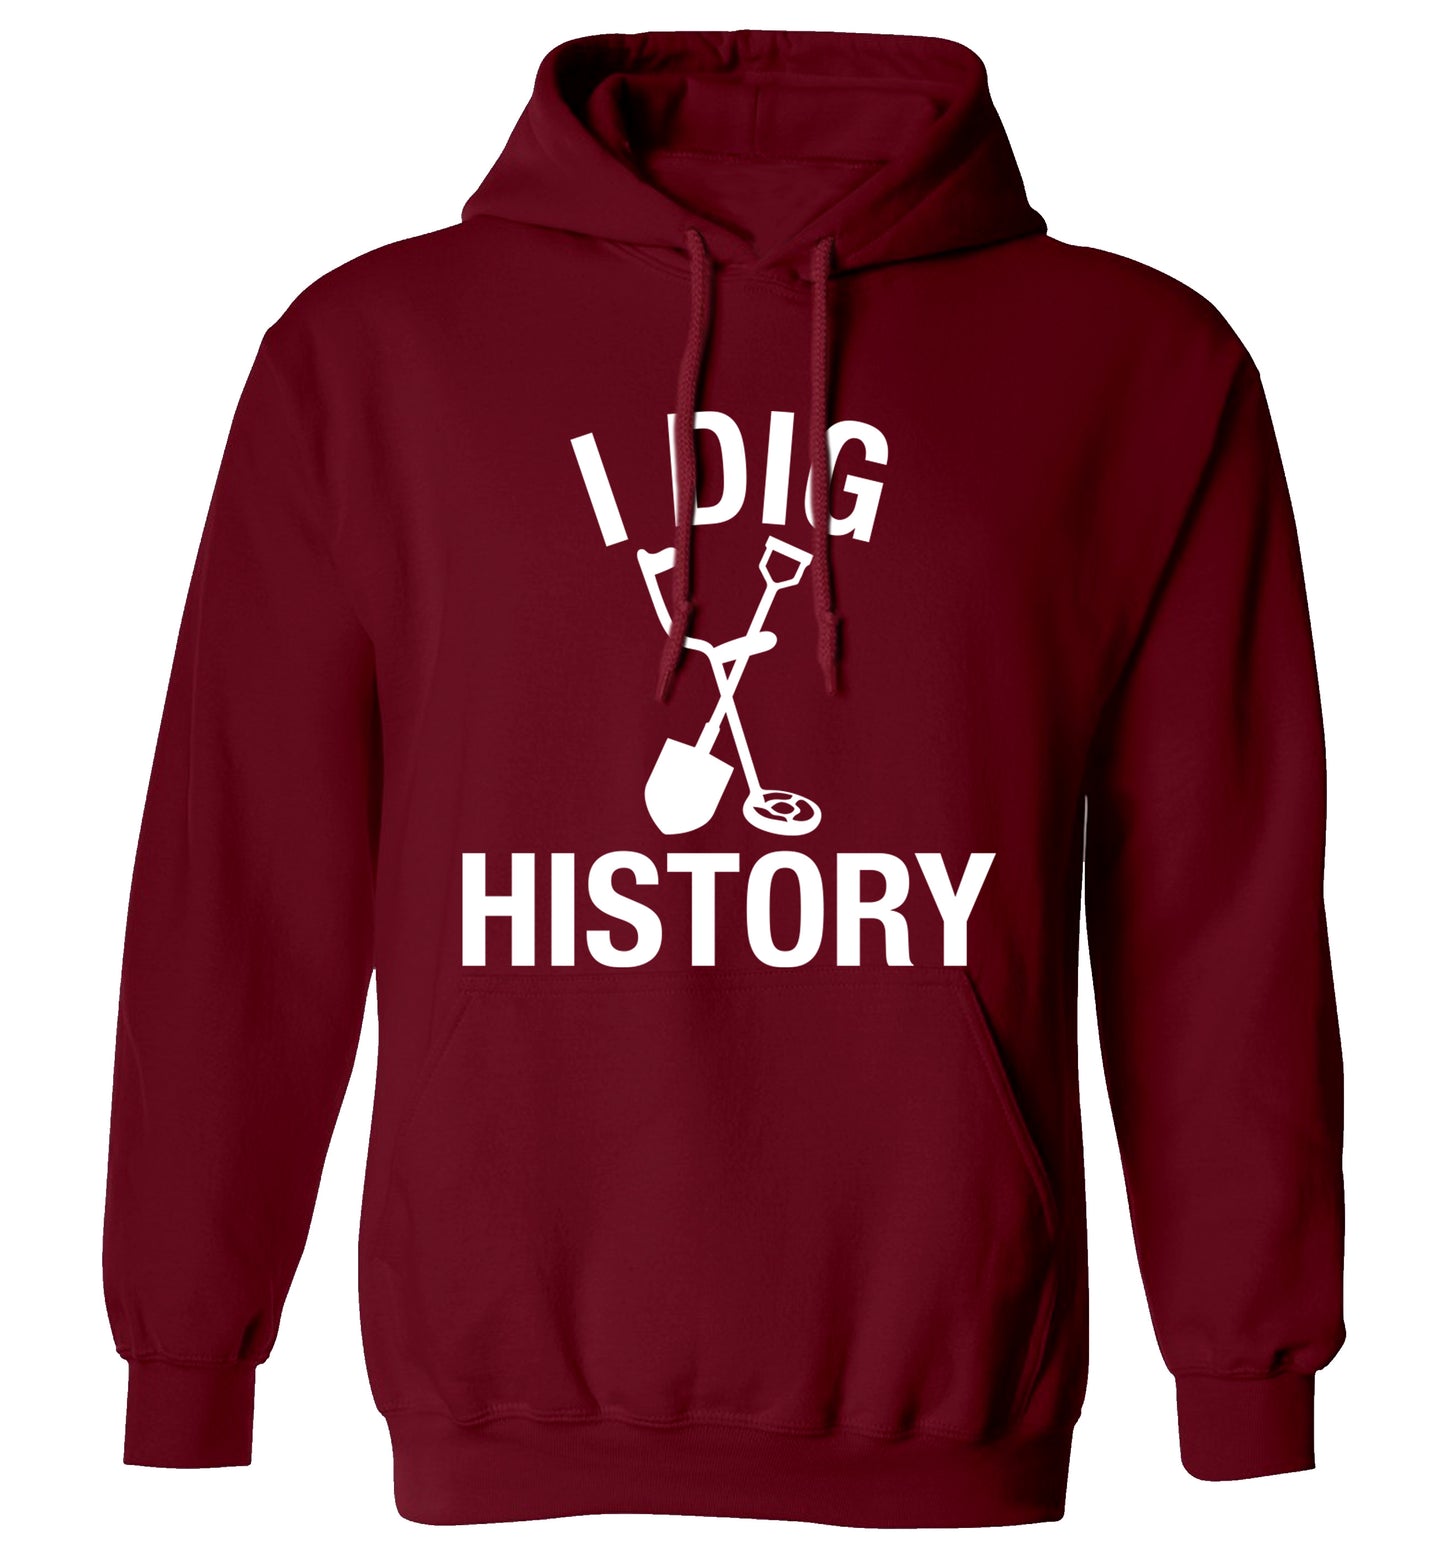 I dig history adults unisex maroon hoodie 2XL